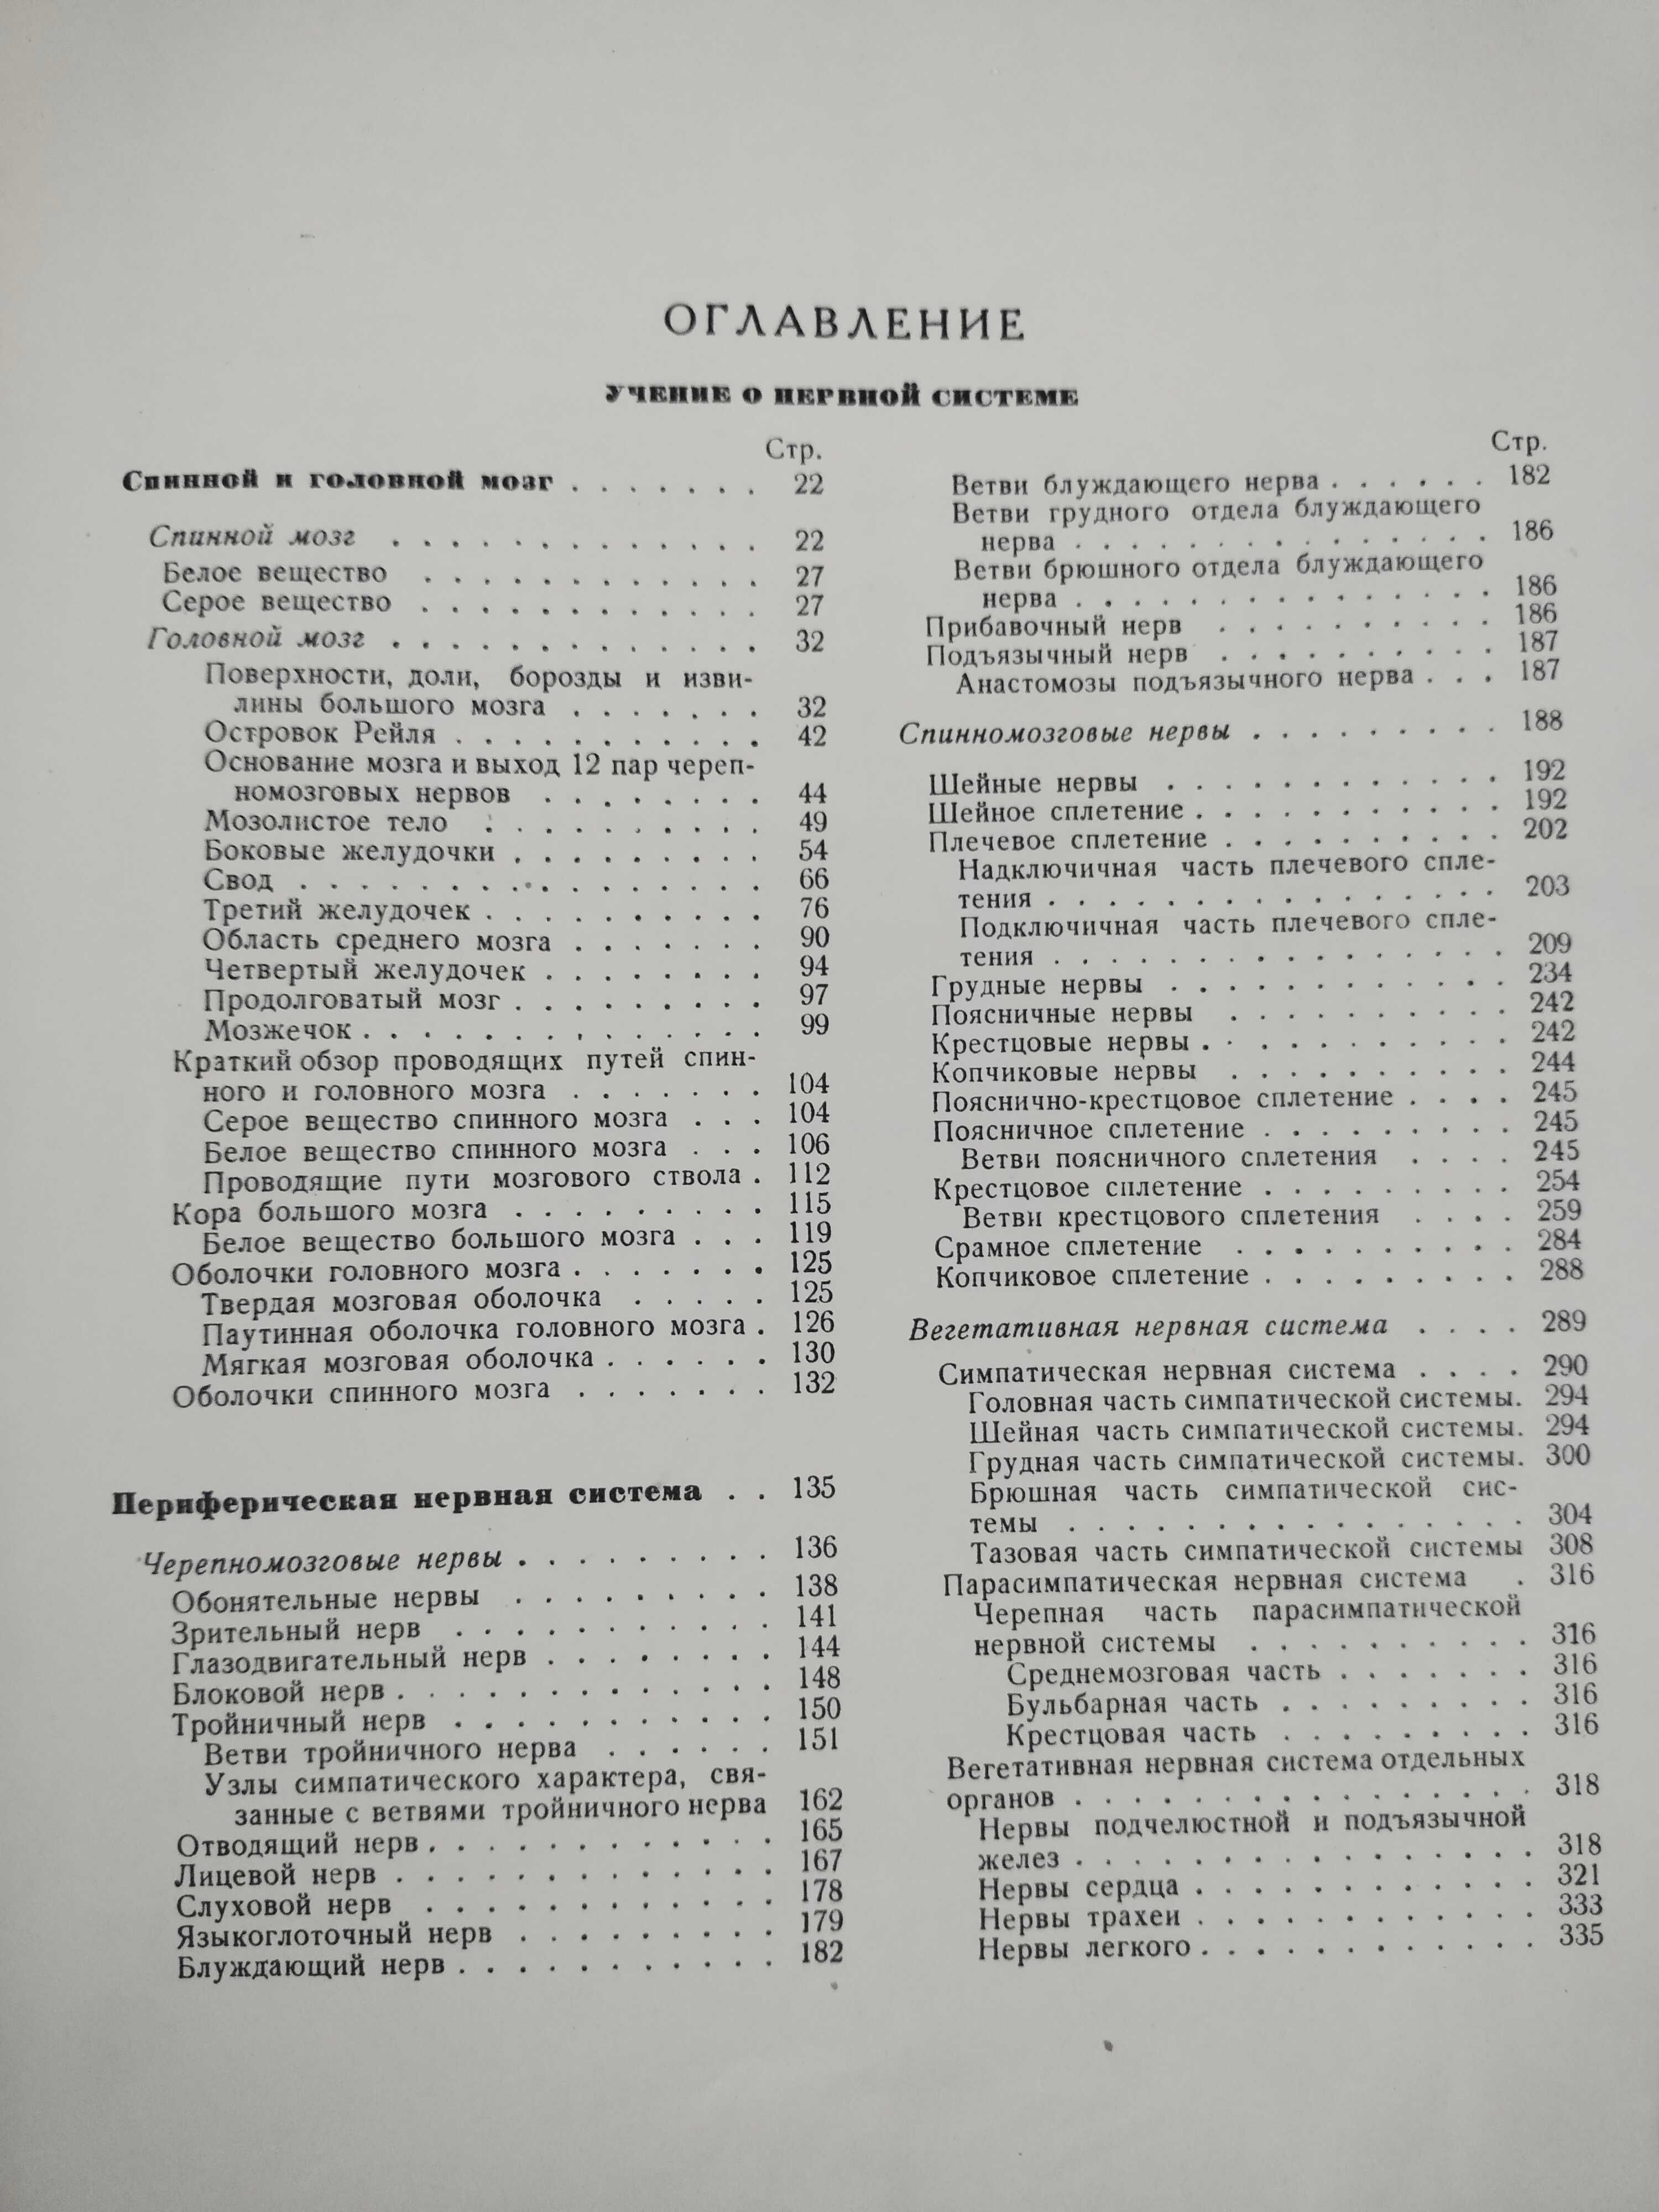 Атлас анатомии человека,том 5,Медгиз,1948 г.